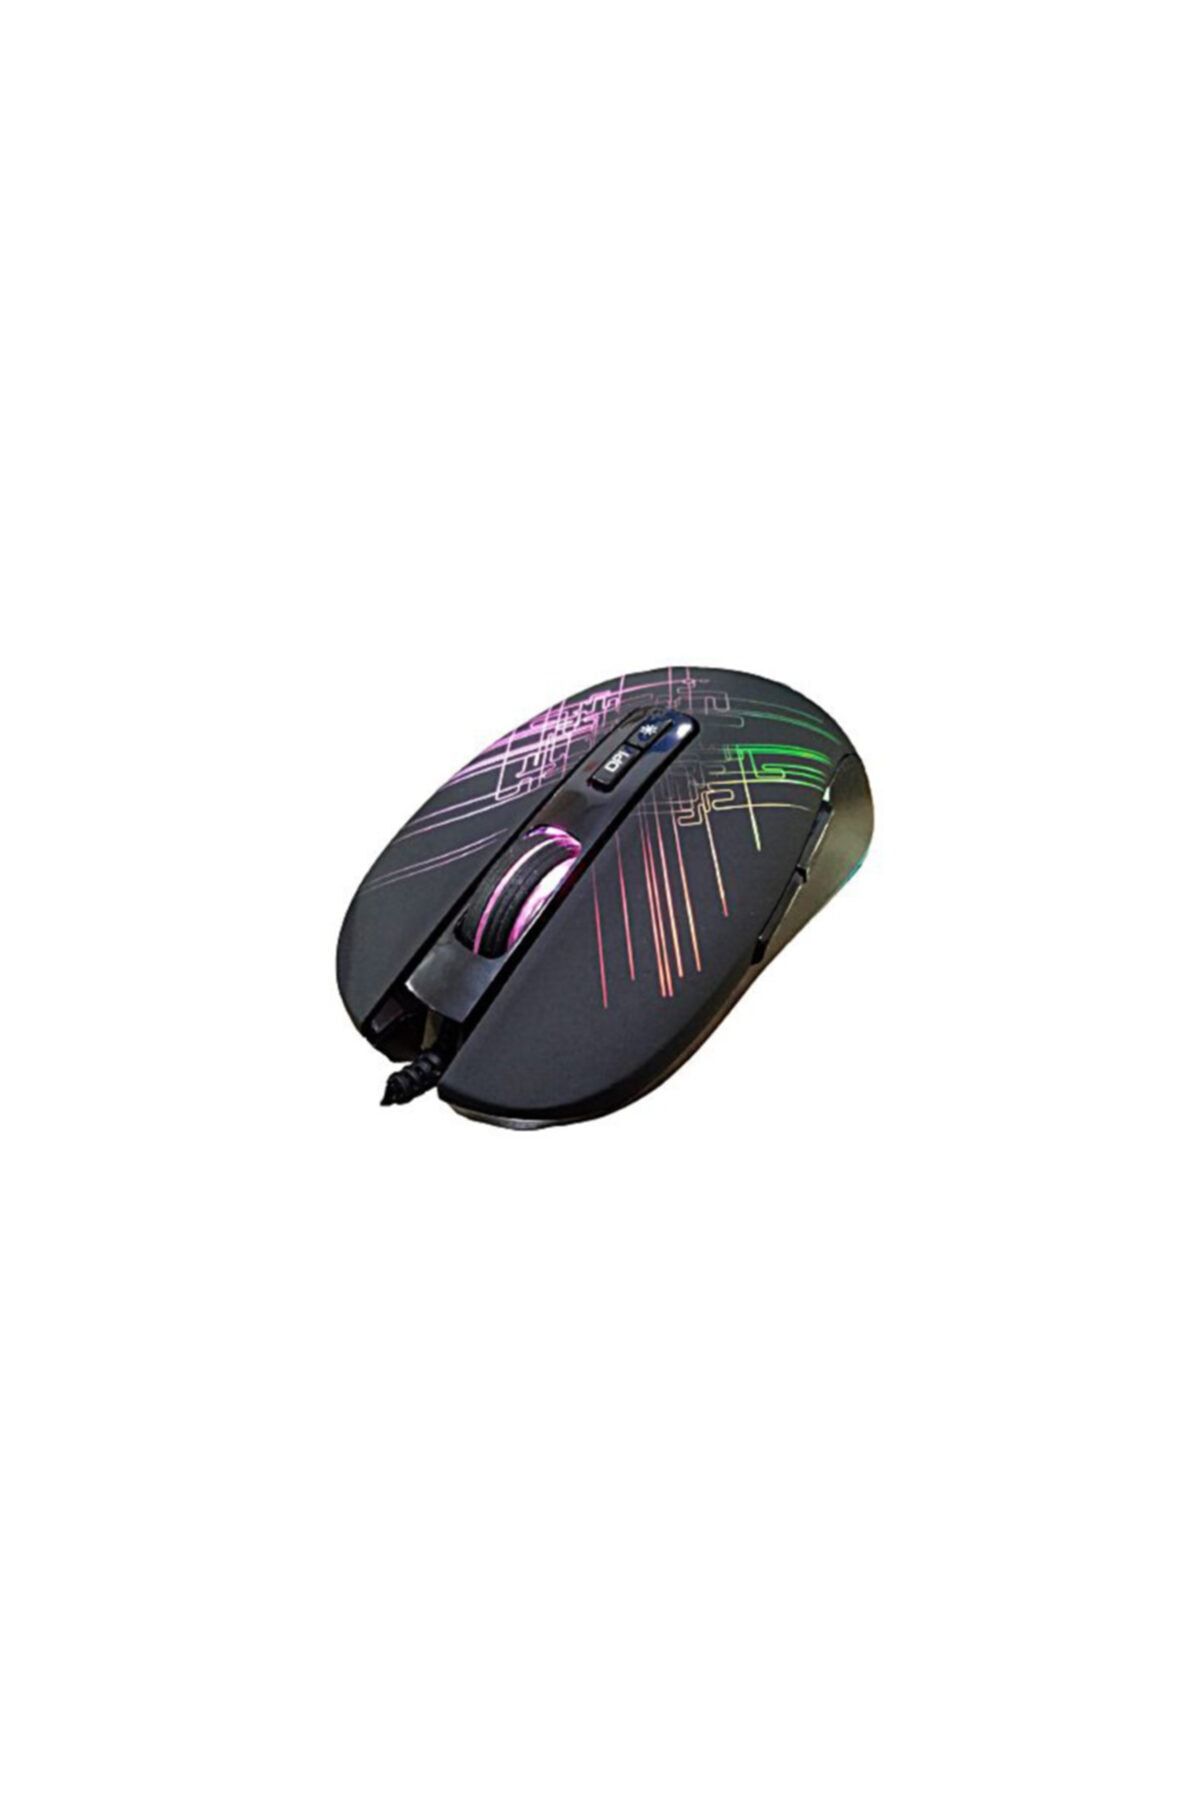 Kinamax Kx-gm042 Işıklı Gaming Mouse